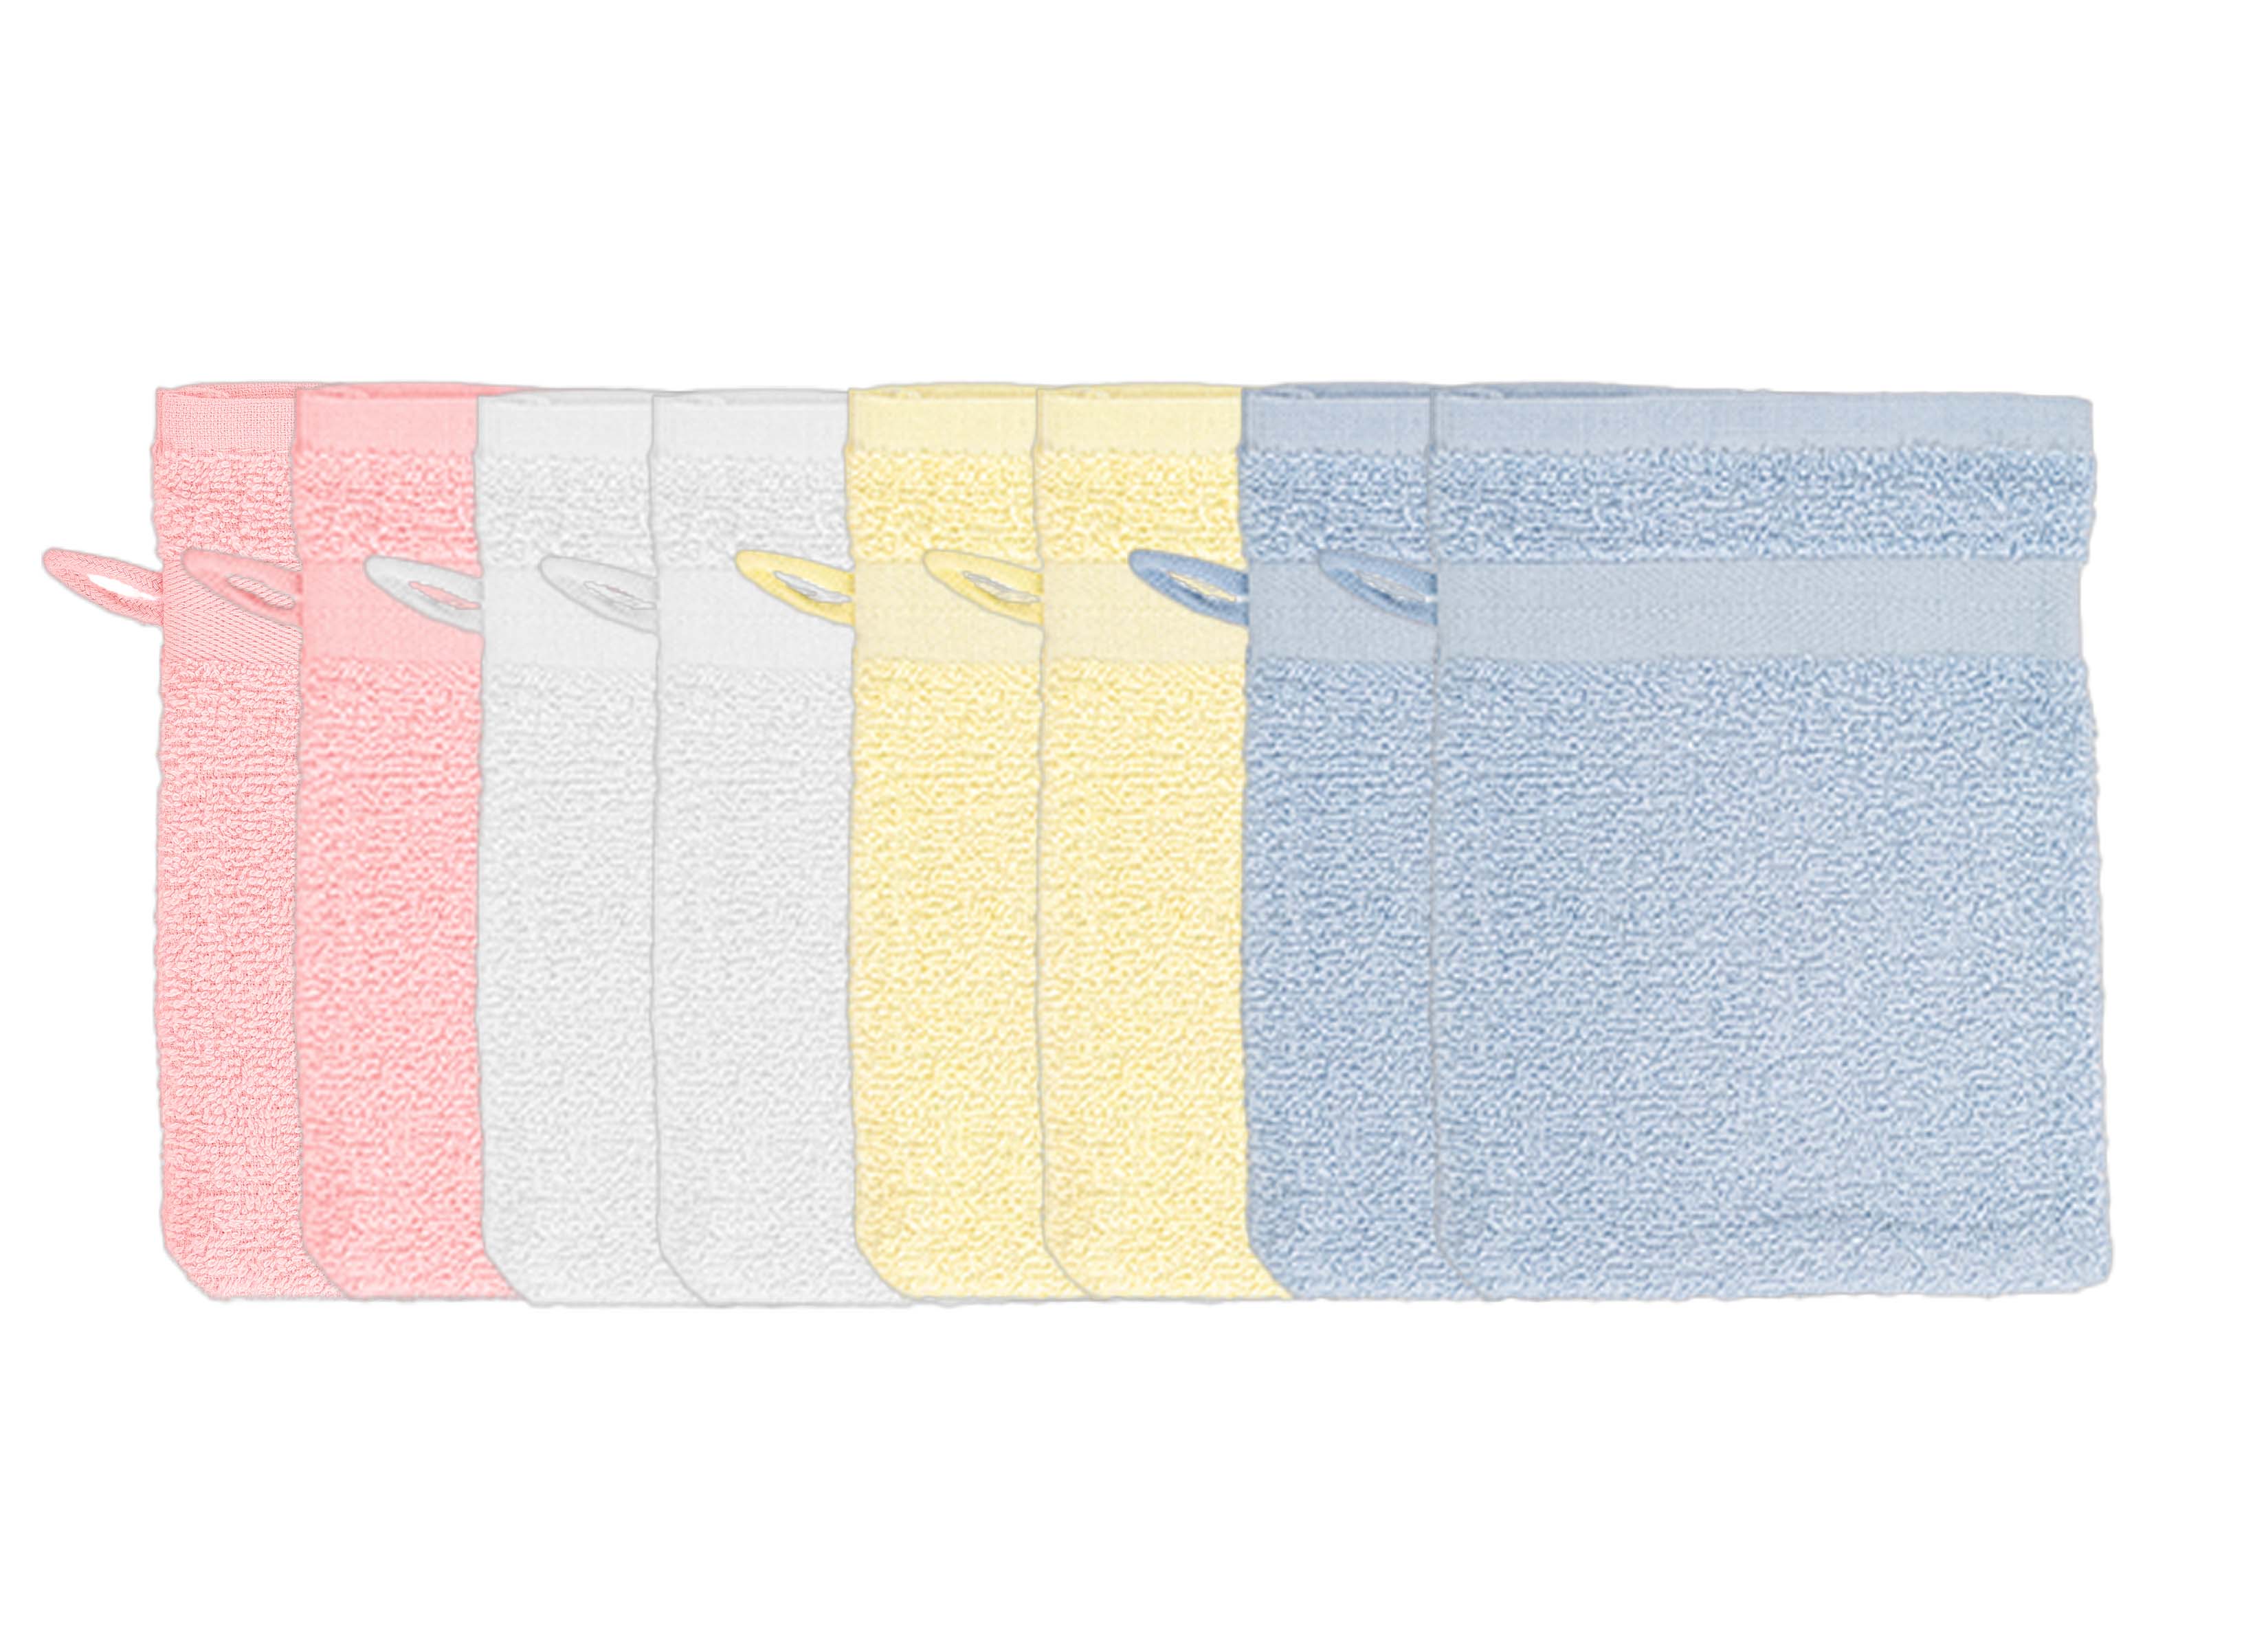 Set of 8 washing gloves 15x 21 cm: 2x white + 2x pink  + 2x light blue + 2x light yellow